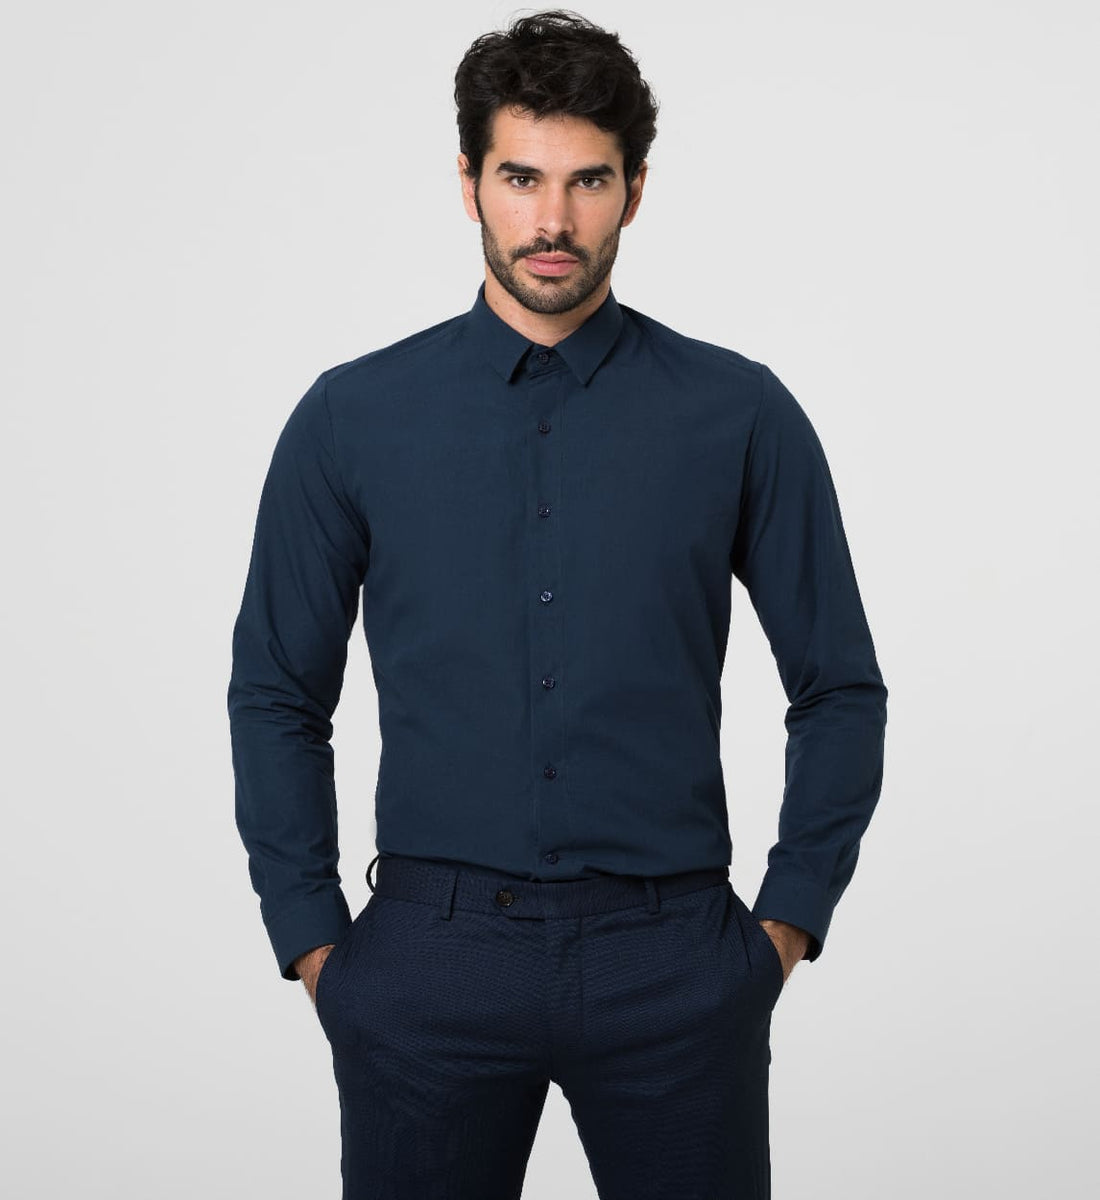 Business anti-sweat shirt Navy blue